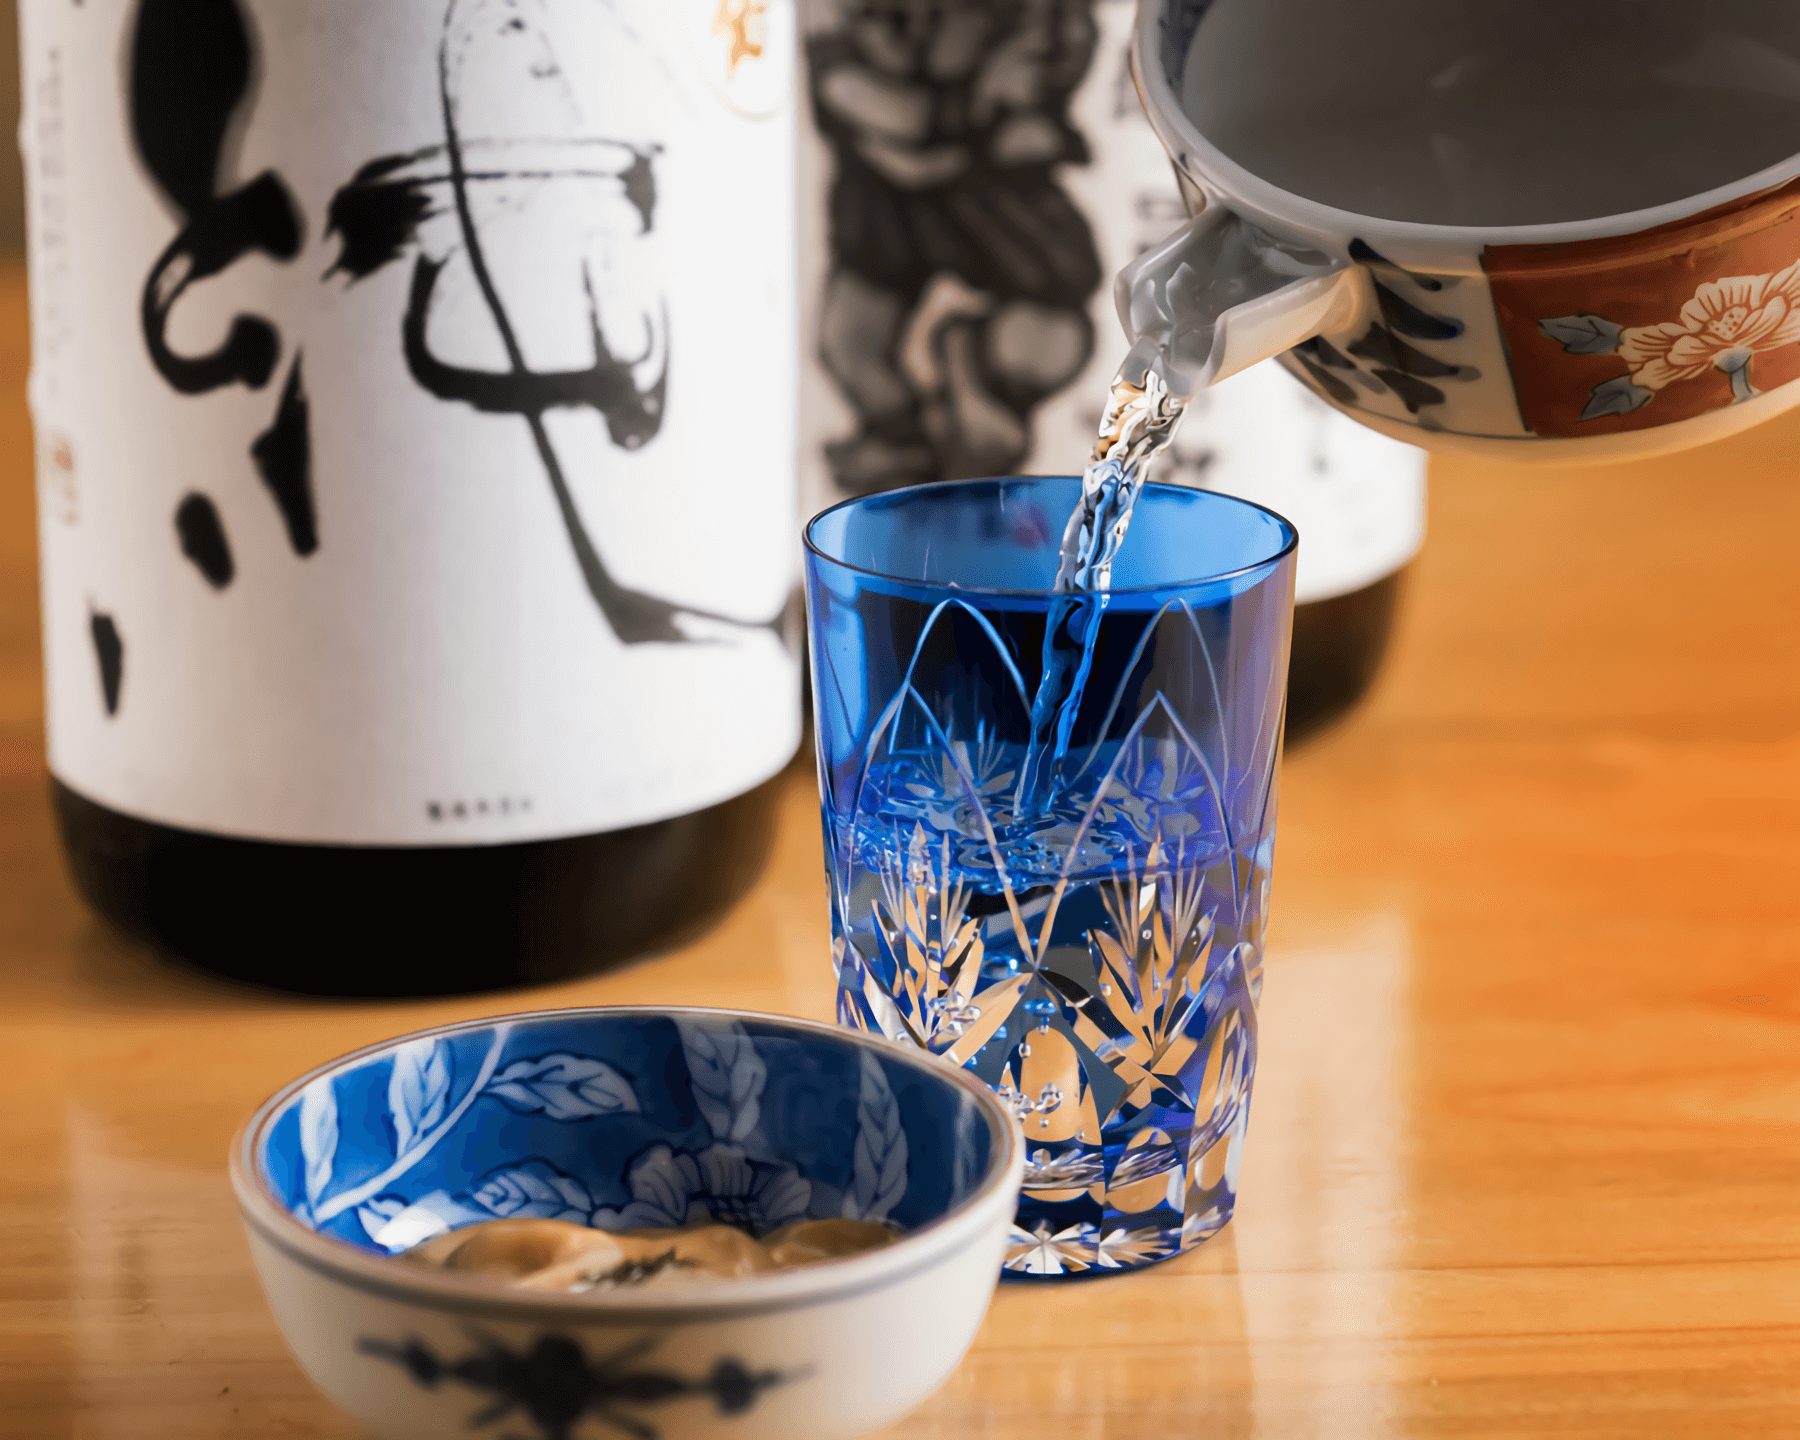 We serve cold sake using cool-looking vessel.